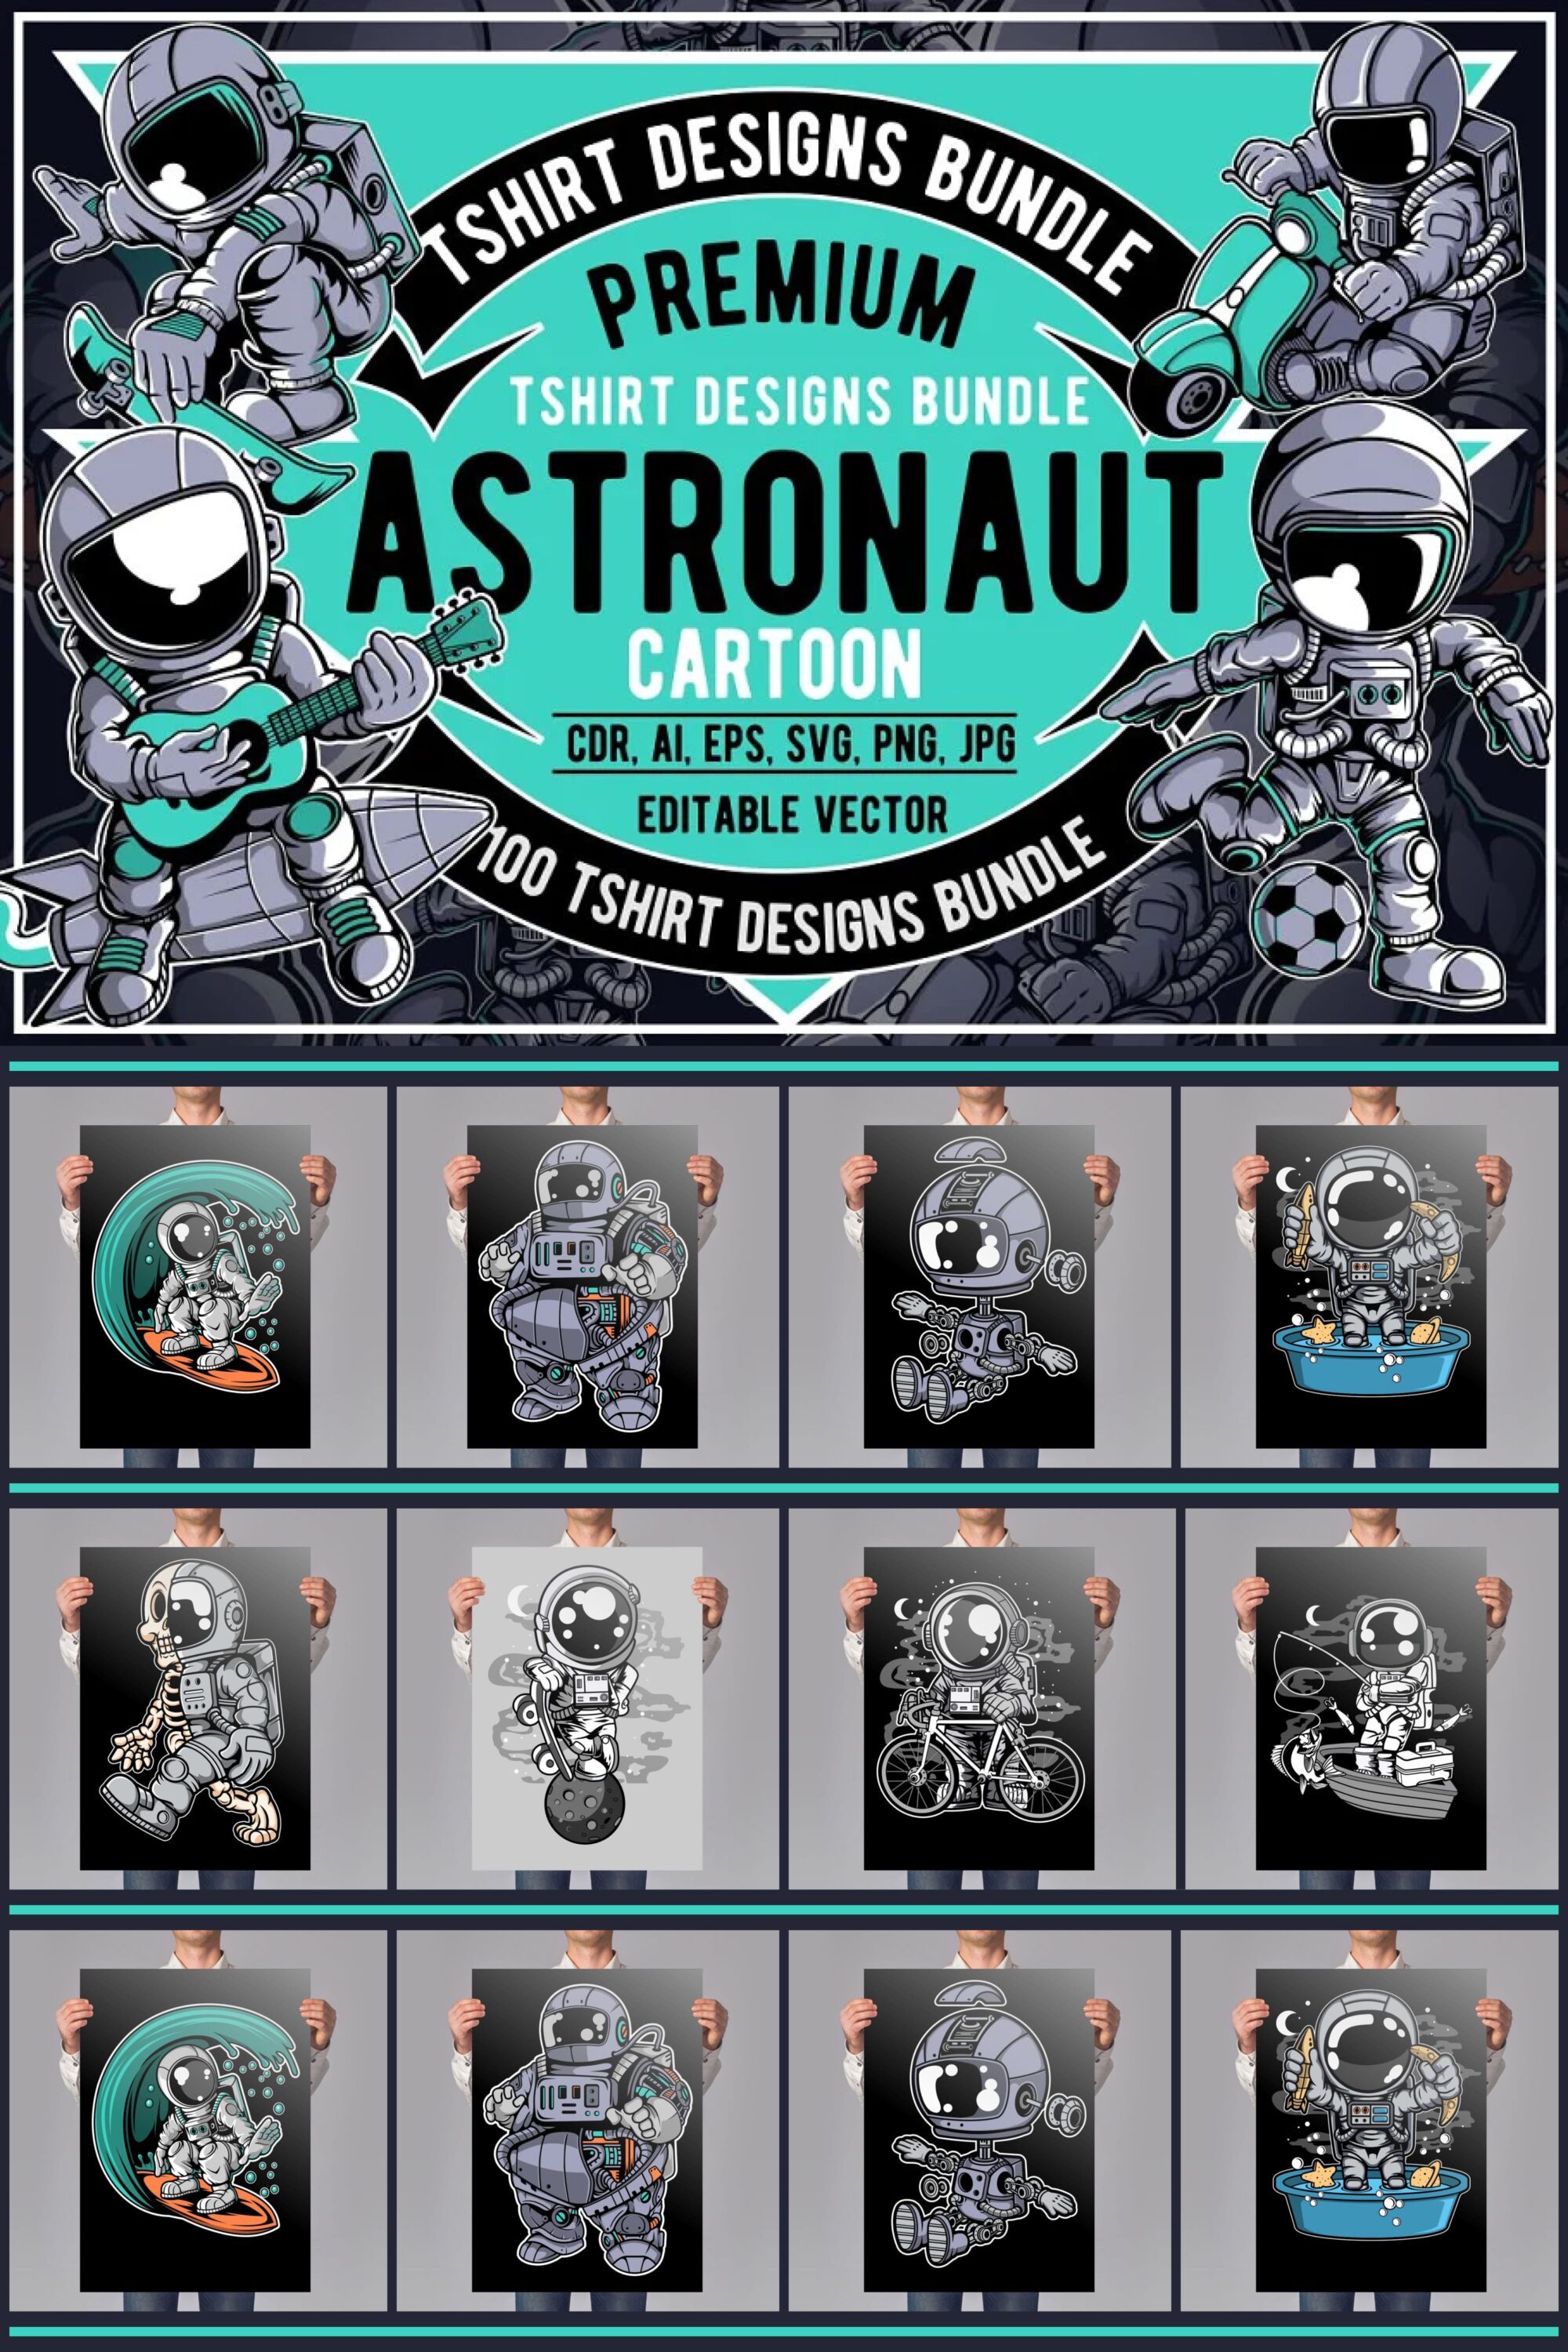 100 Astronaut Cartoon Designs Bundle pinterest image.